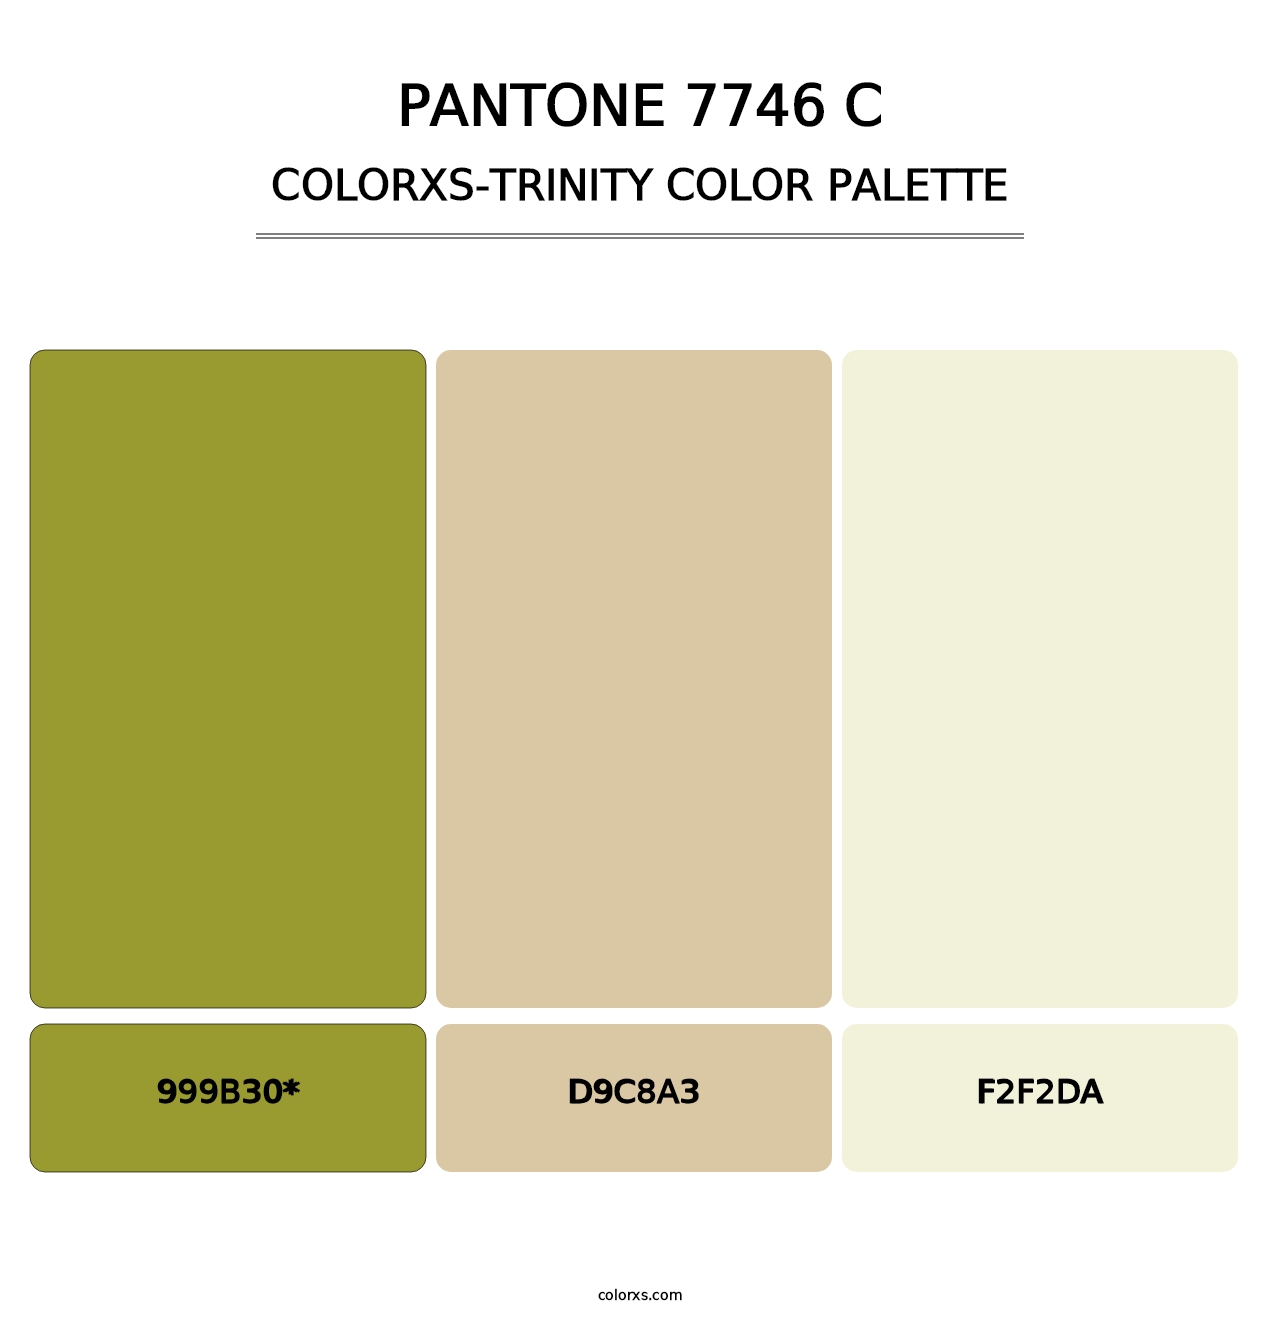 PANTONE 7746 C - Colorxs Trinity Palette